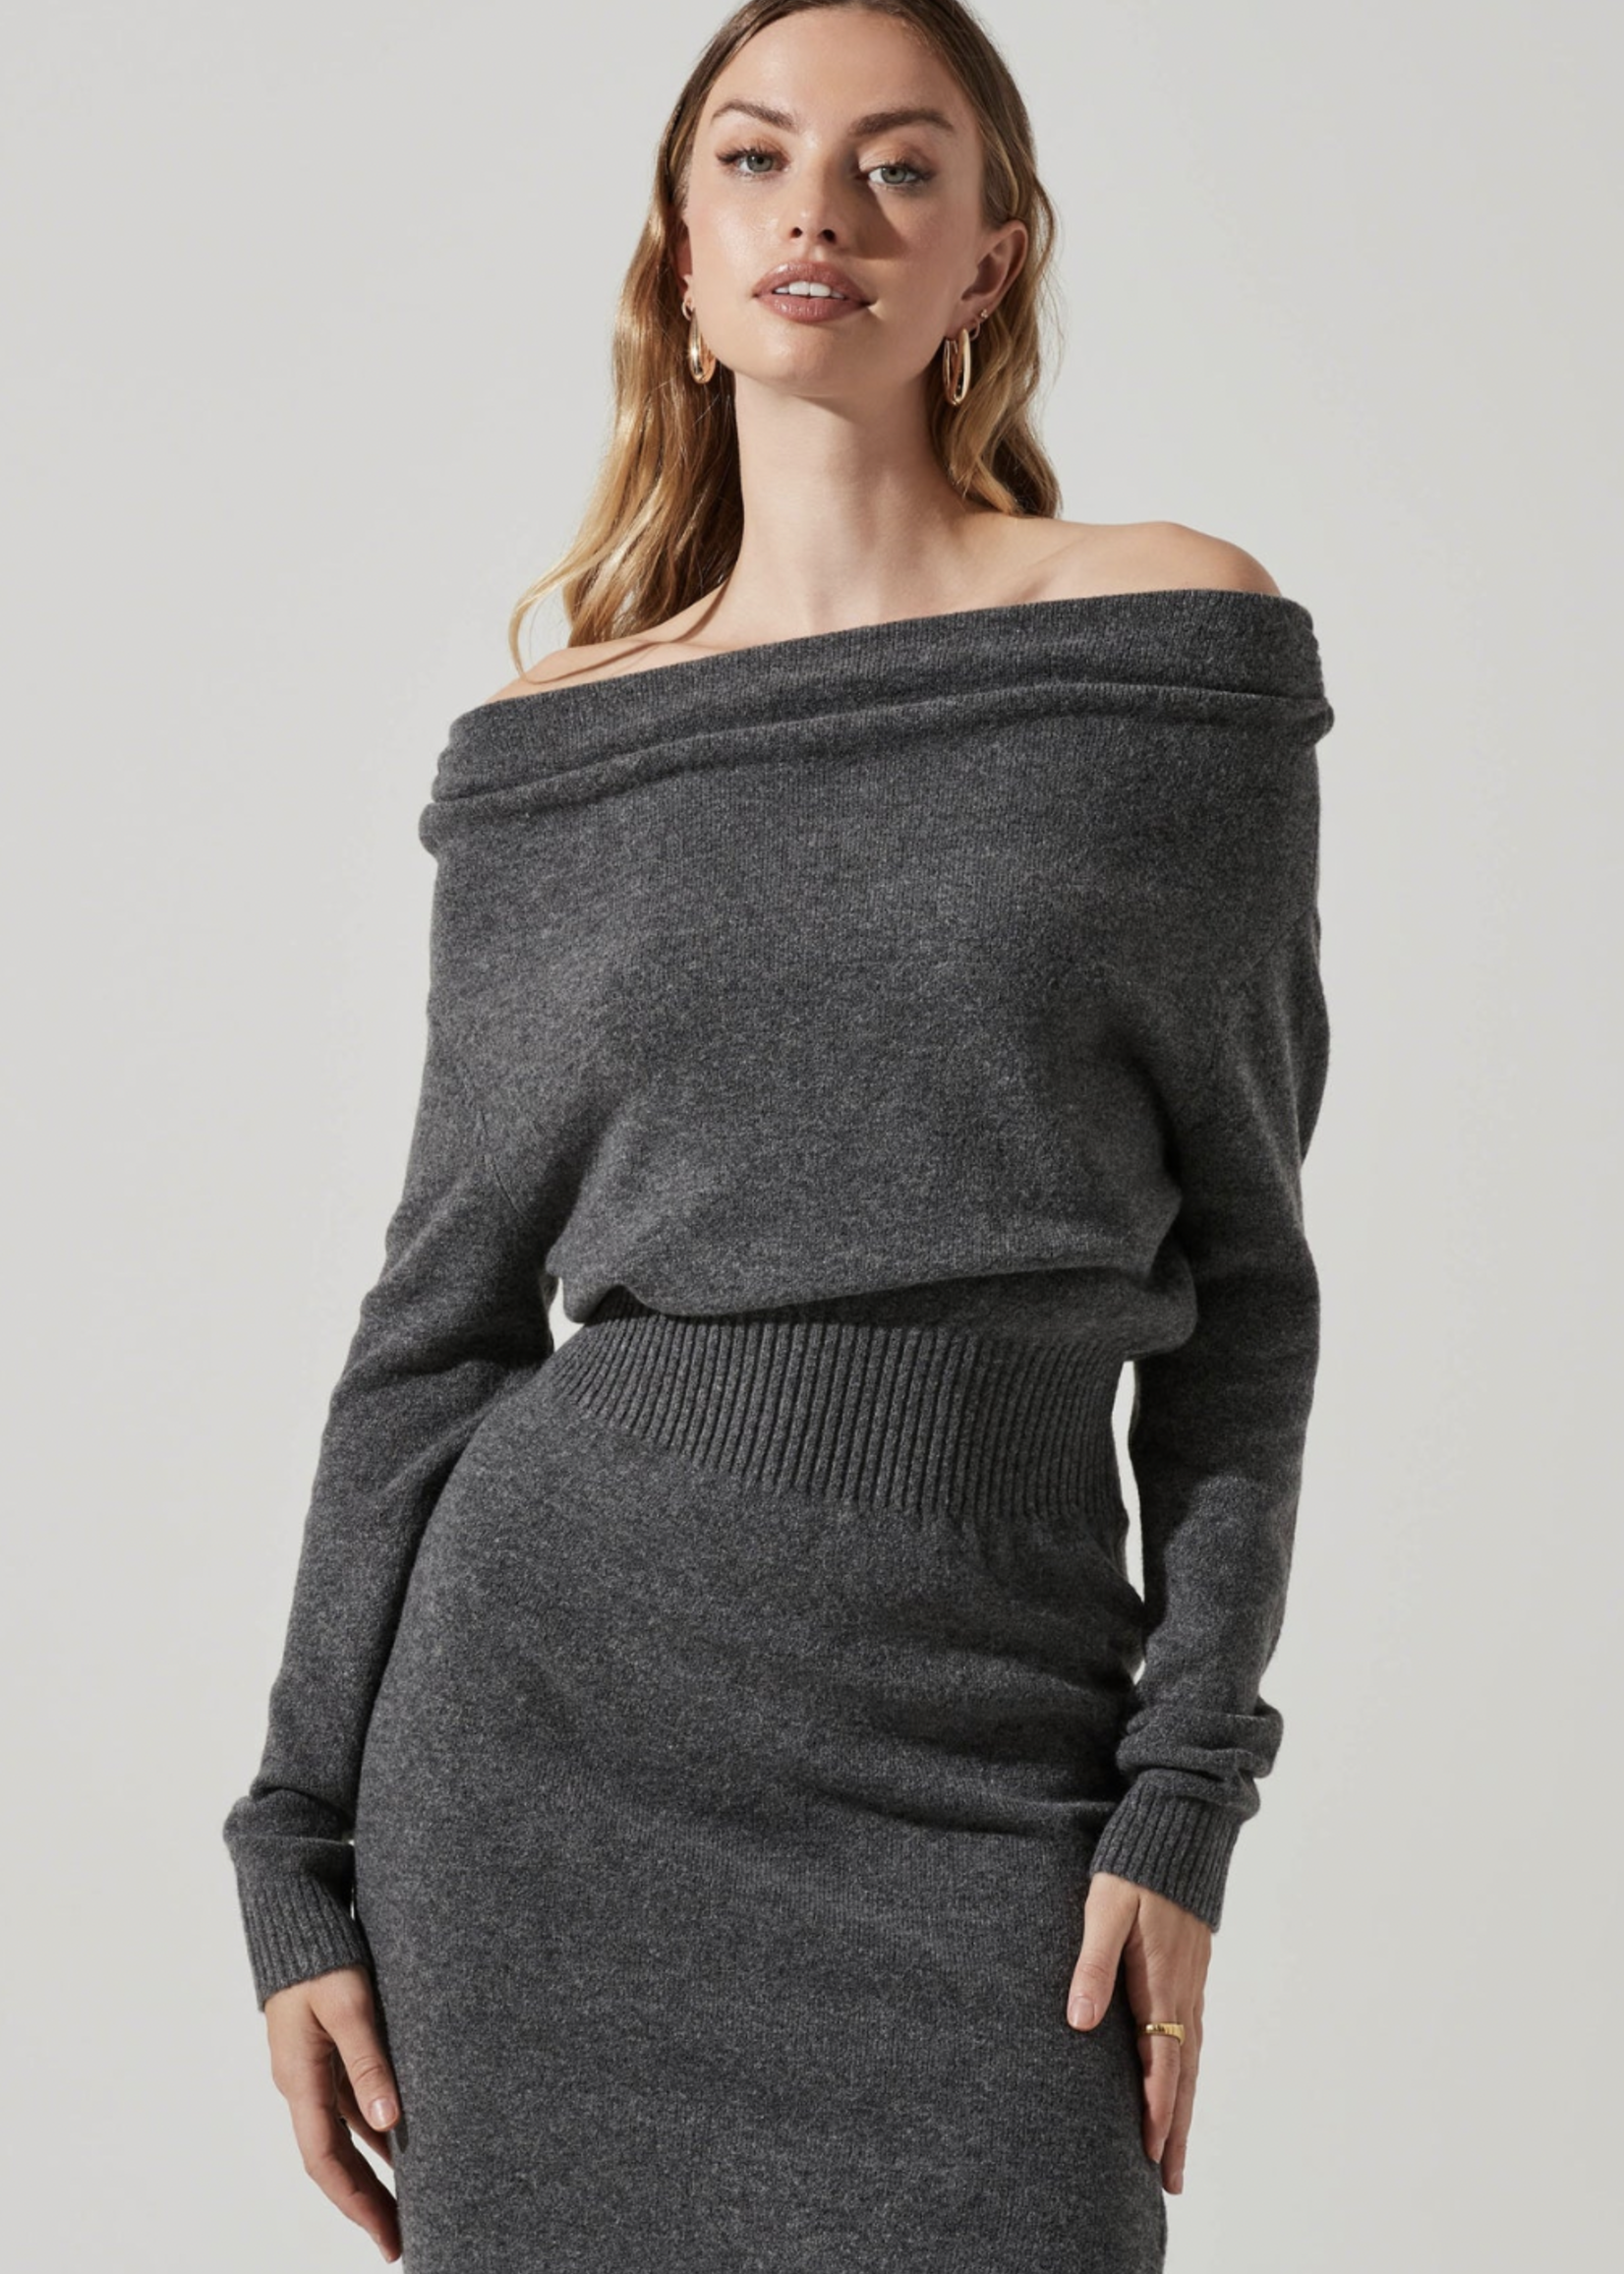 Elitaire Boutique Cora Charcoal Sweater Dress